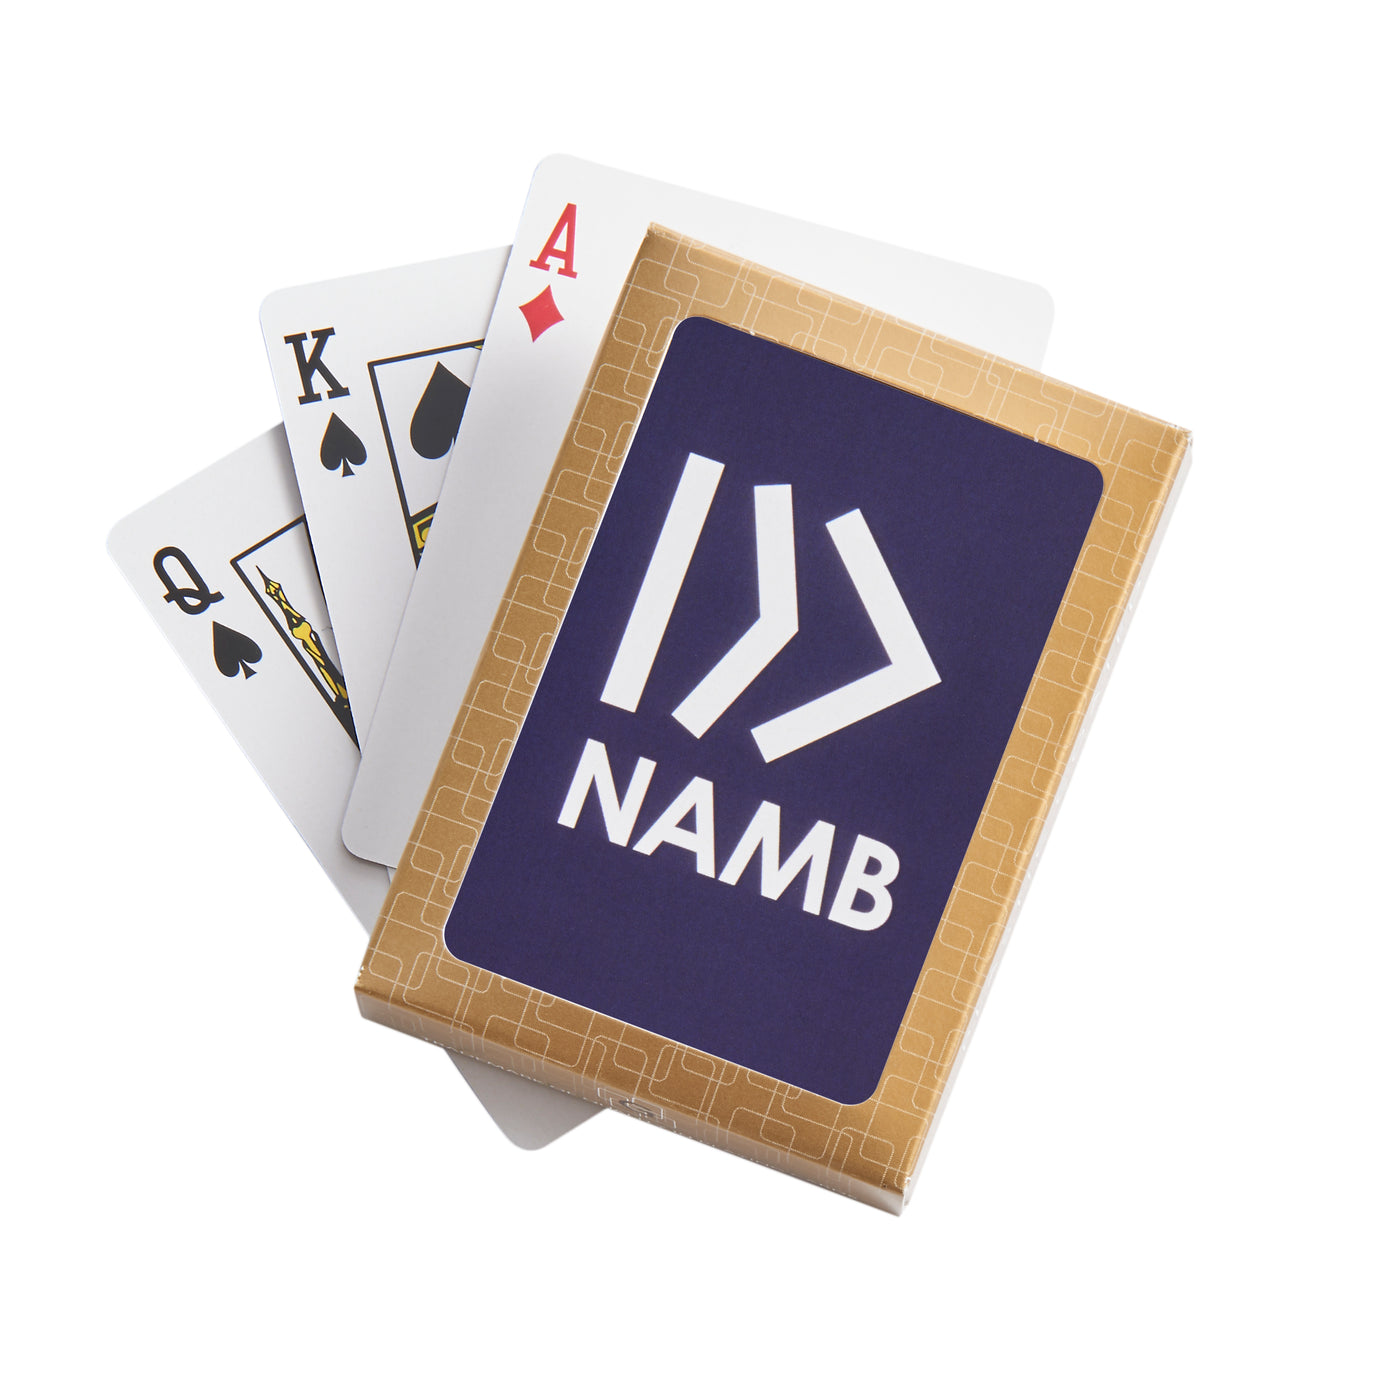 NAMB Deck of Cards